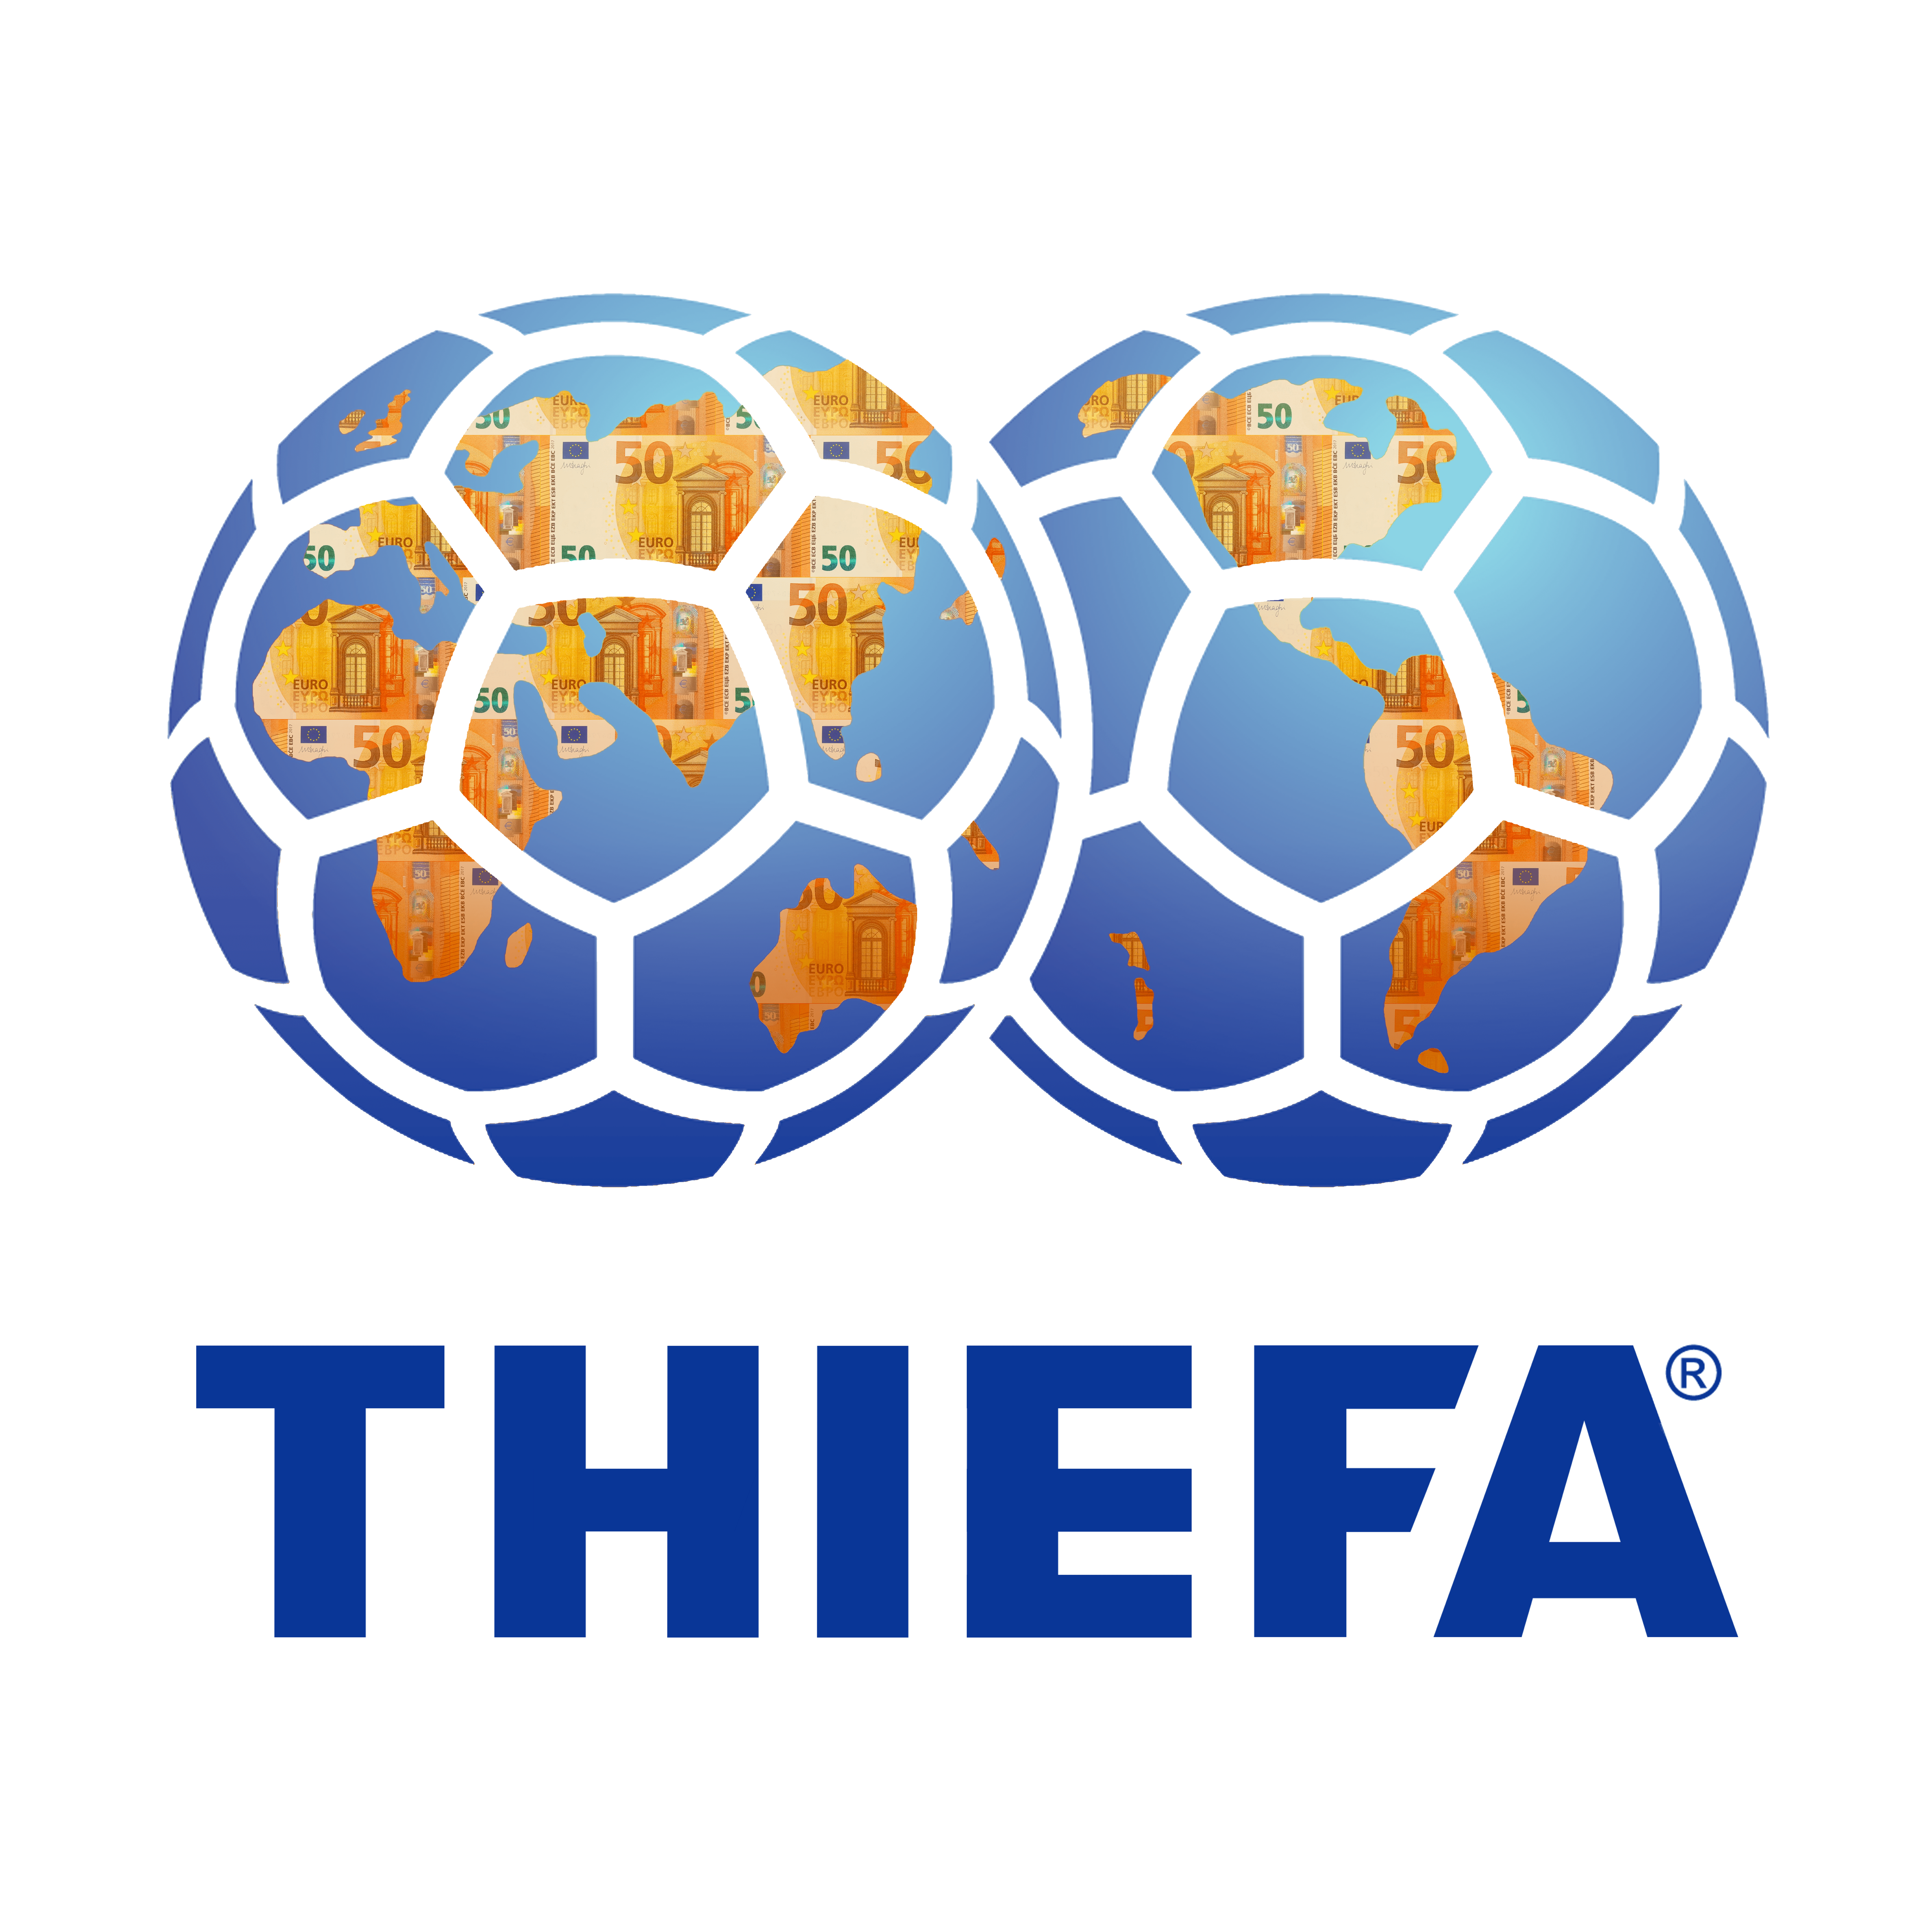 FIFA Logo - I remixed the FIFA logo to highlight the corruption of the Russia ...